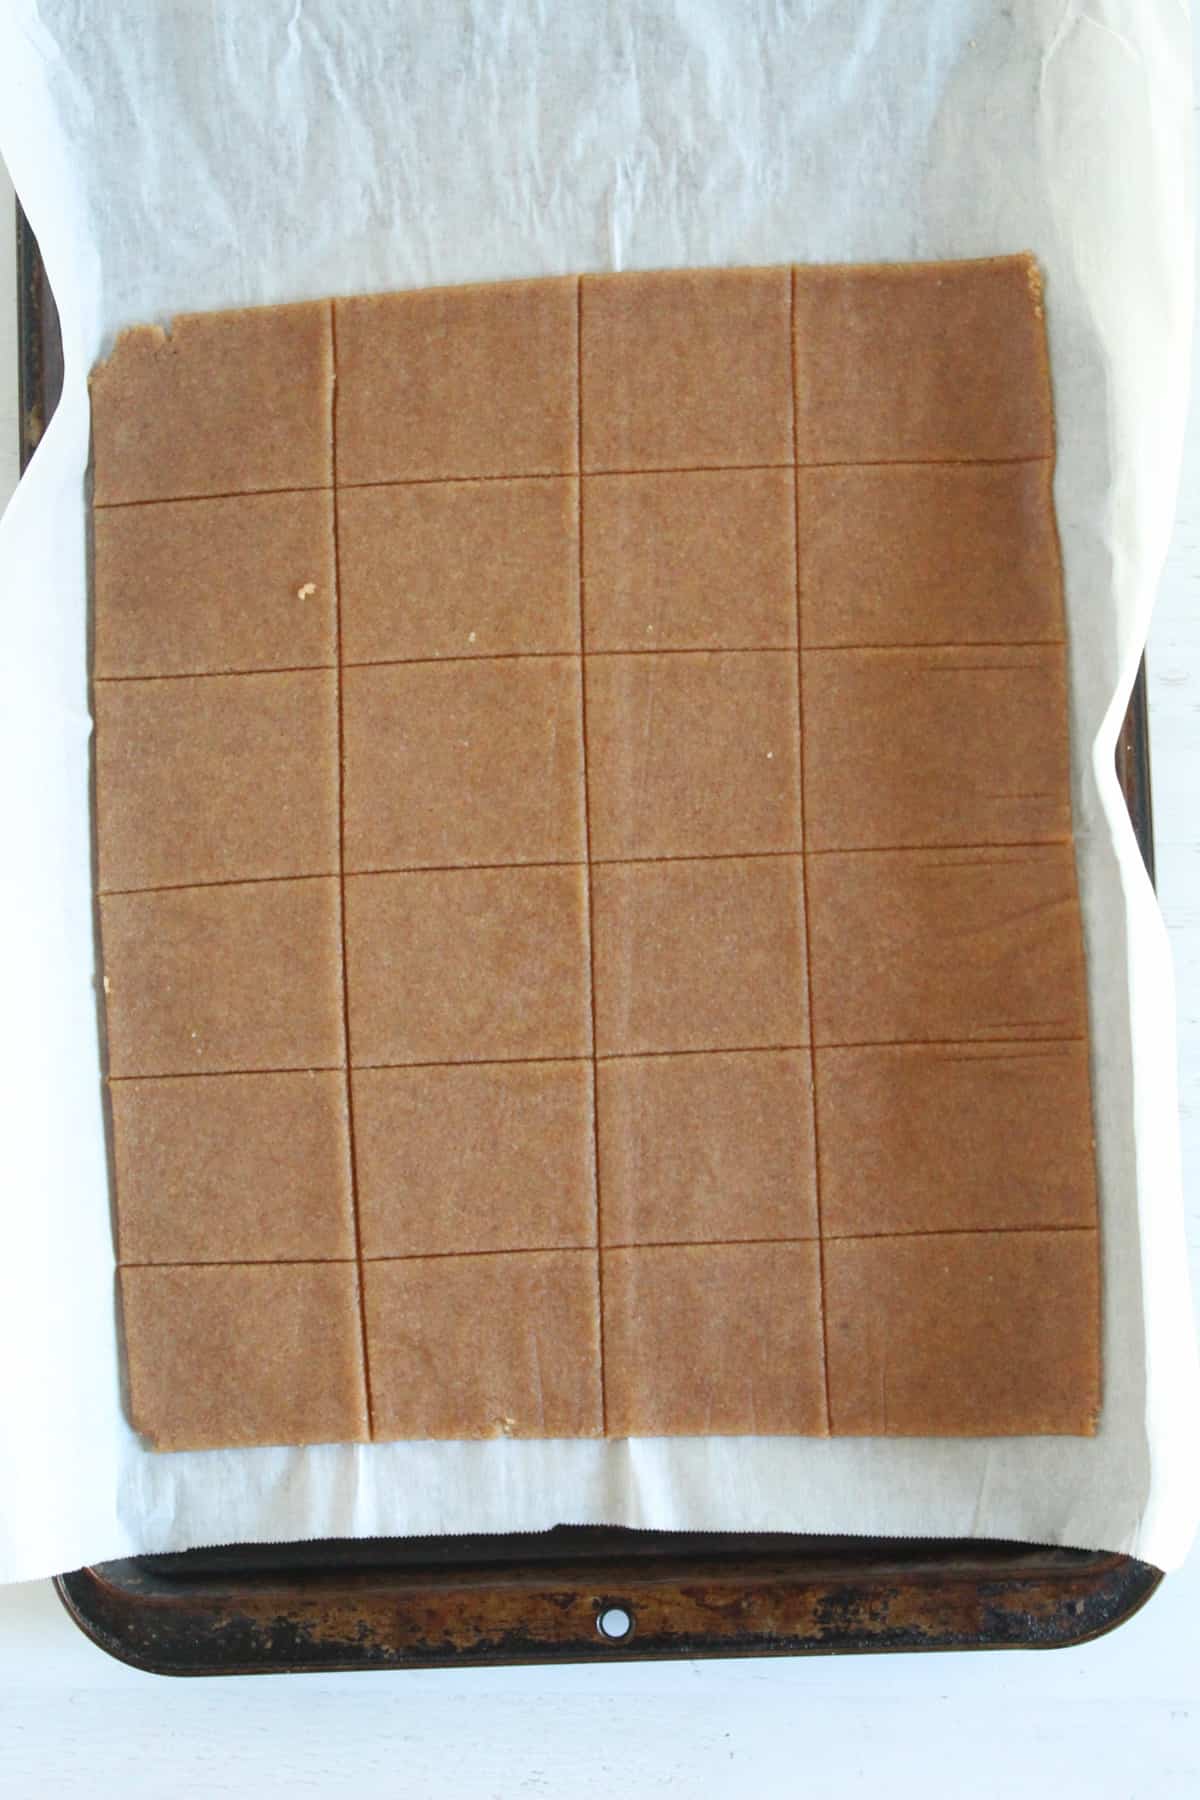 full sheet of graham crackers cut